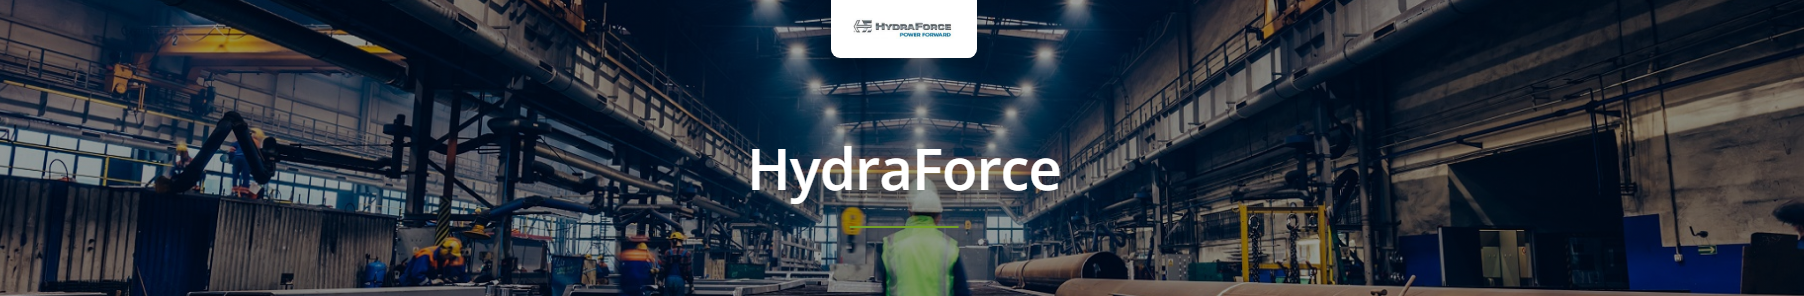 HydraForce Electro-Proportional Valves